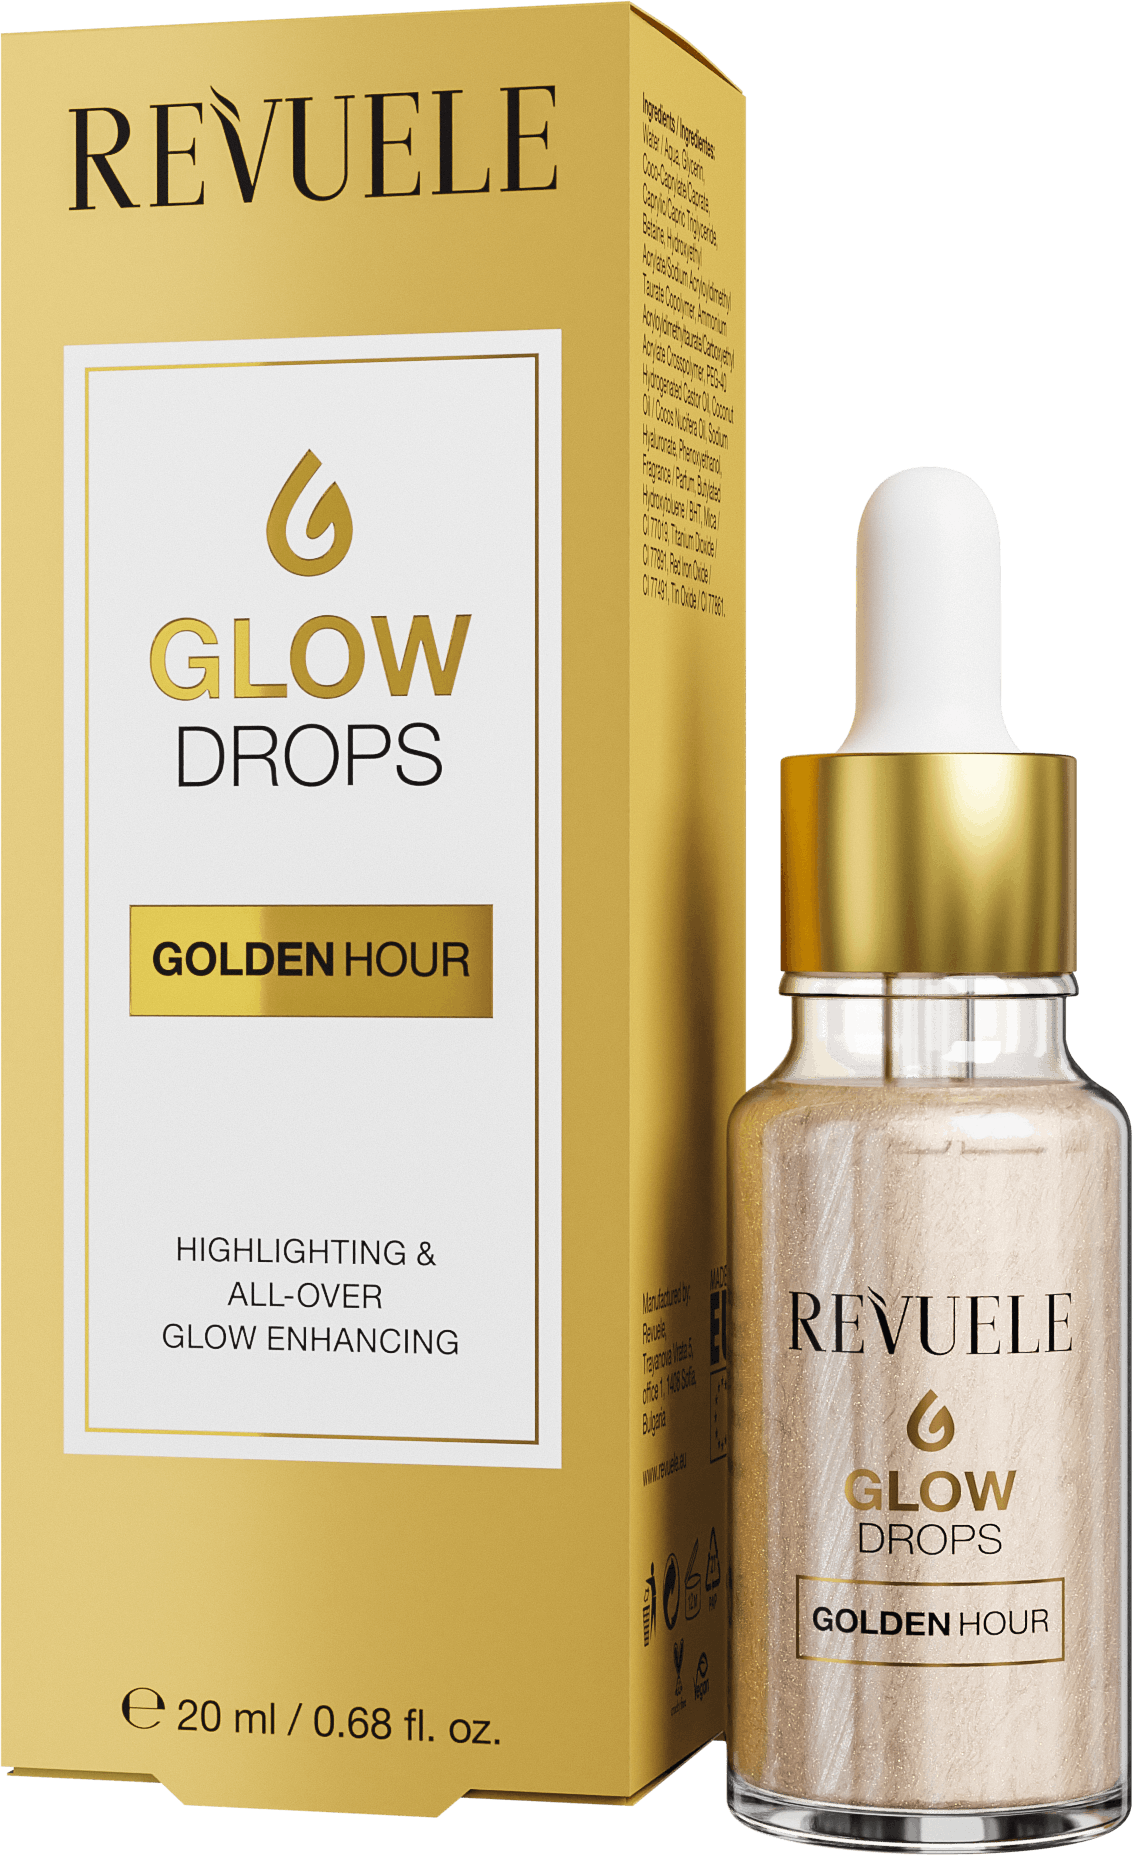 Revuele Glow Drops Golden Hour 20 ml